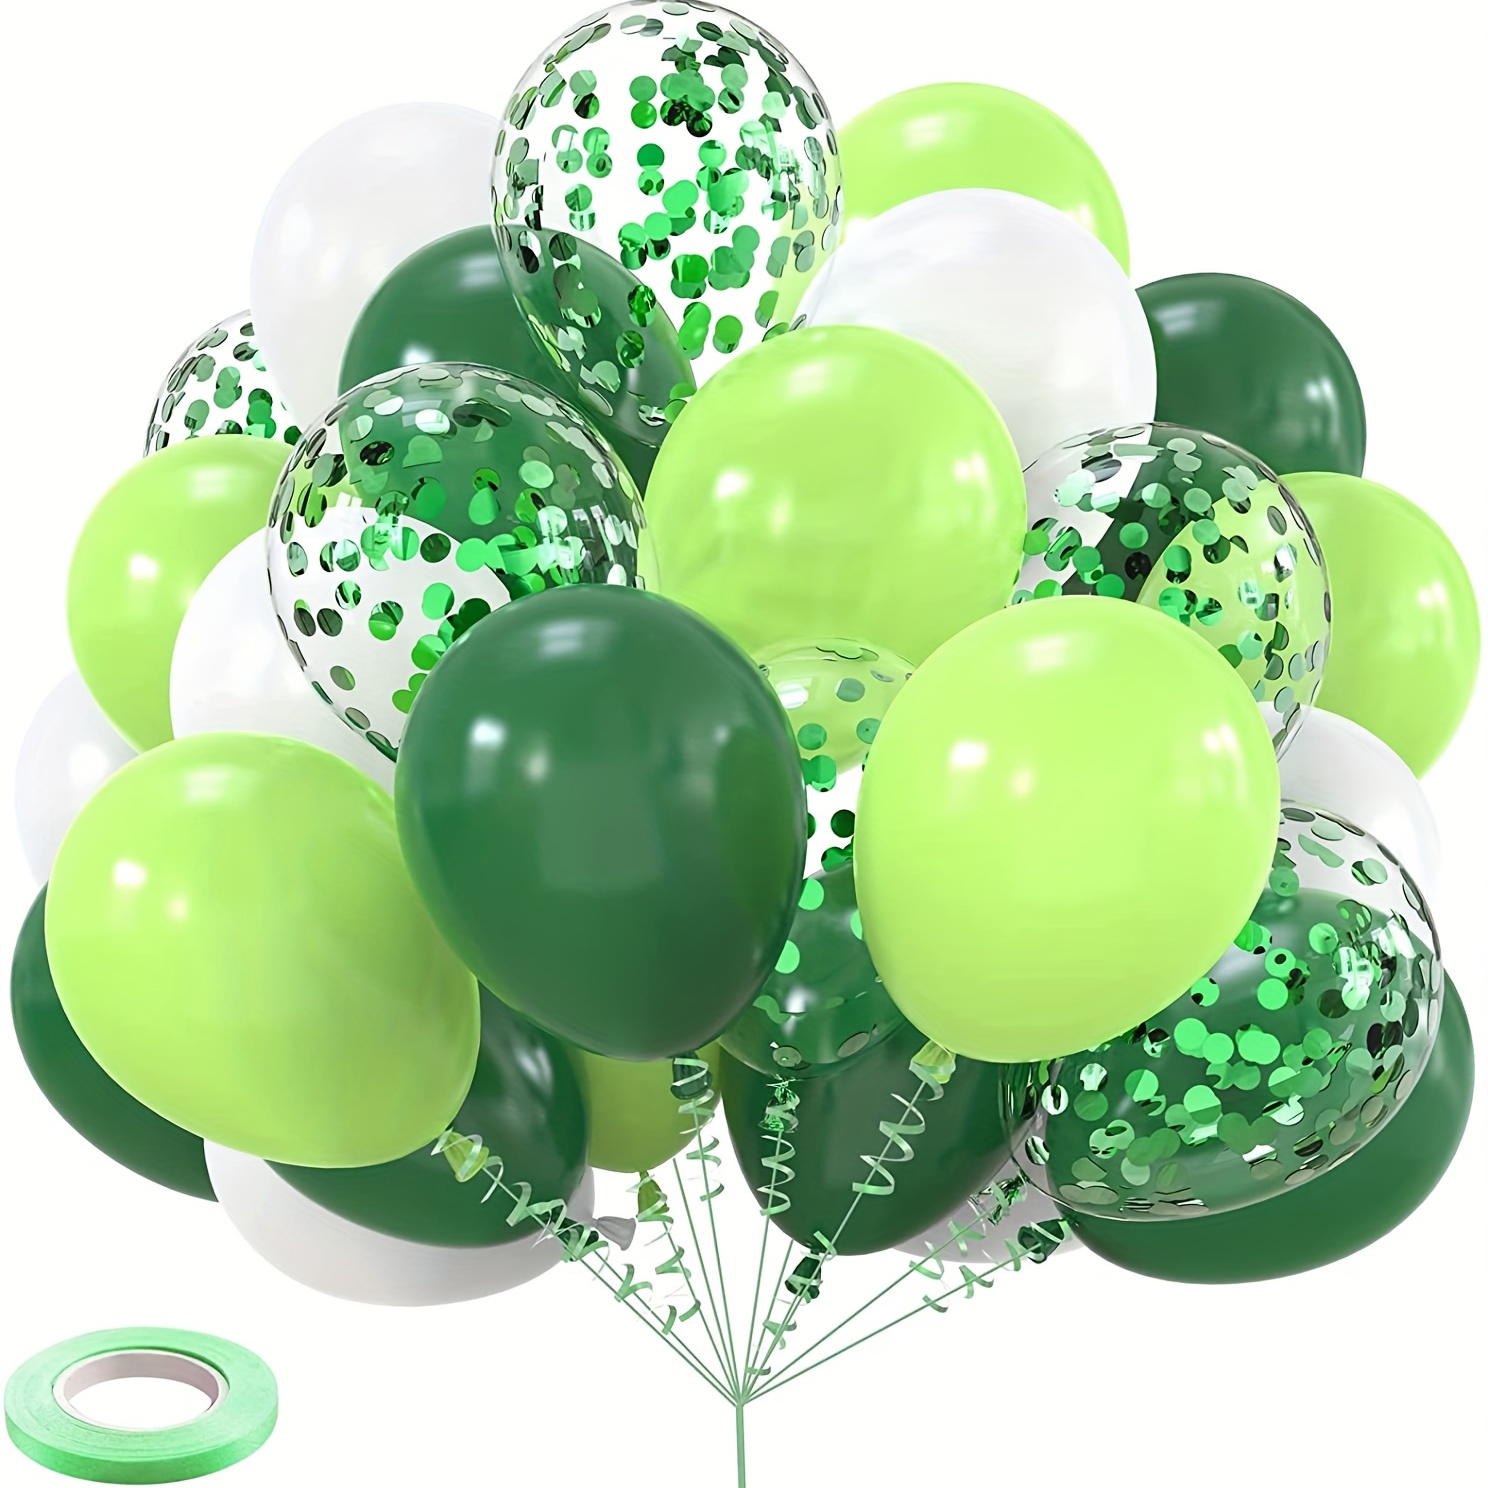 Ballons anniversaire vert clair - 10 ballons en latex - Anniversaires